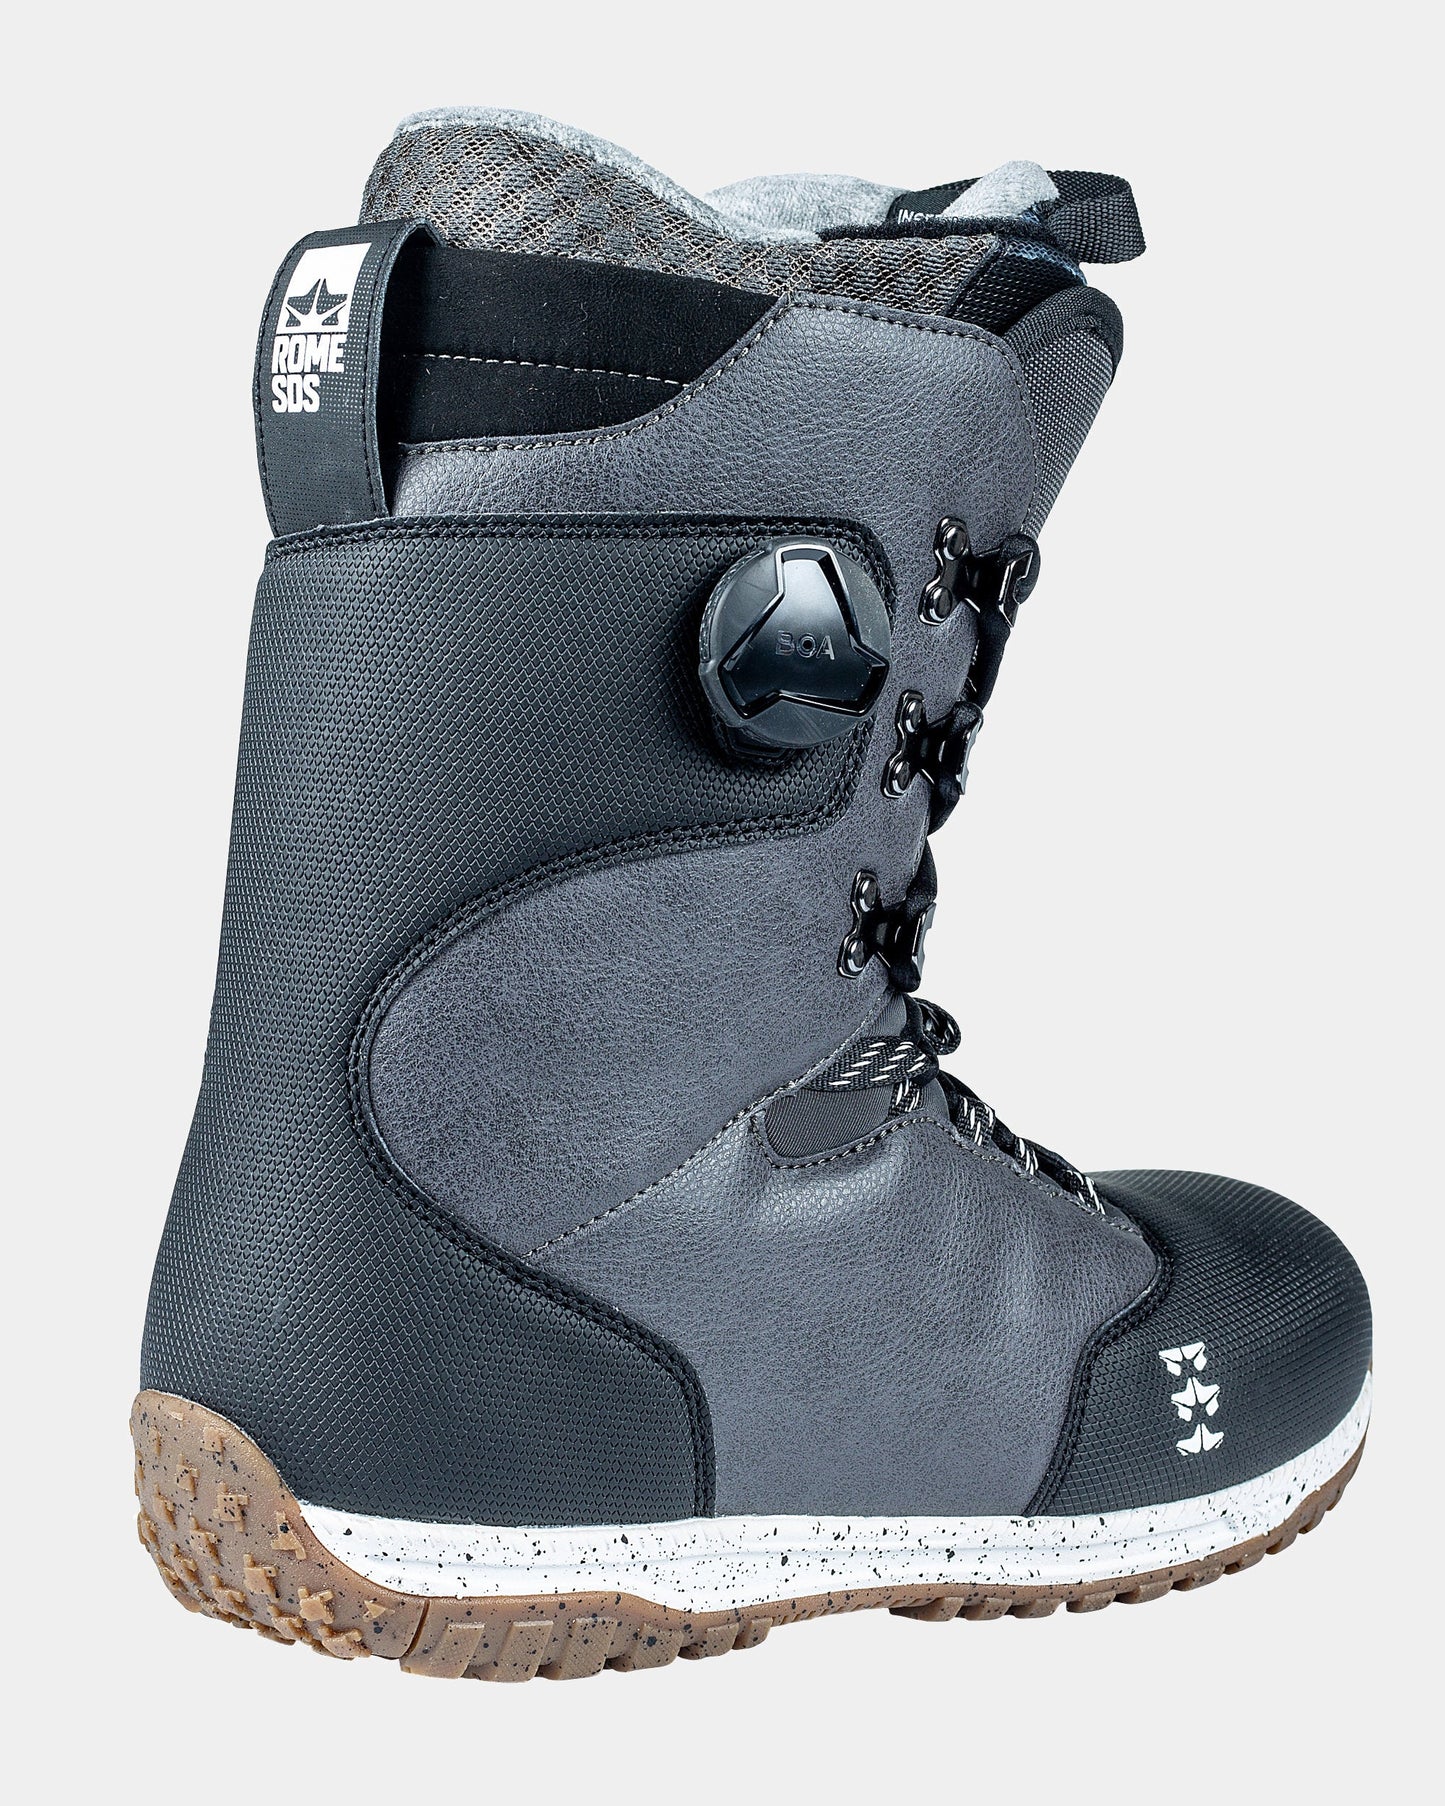 rome sds bodega hybrid boa 2023-2024 men's snowboard boots product image